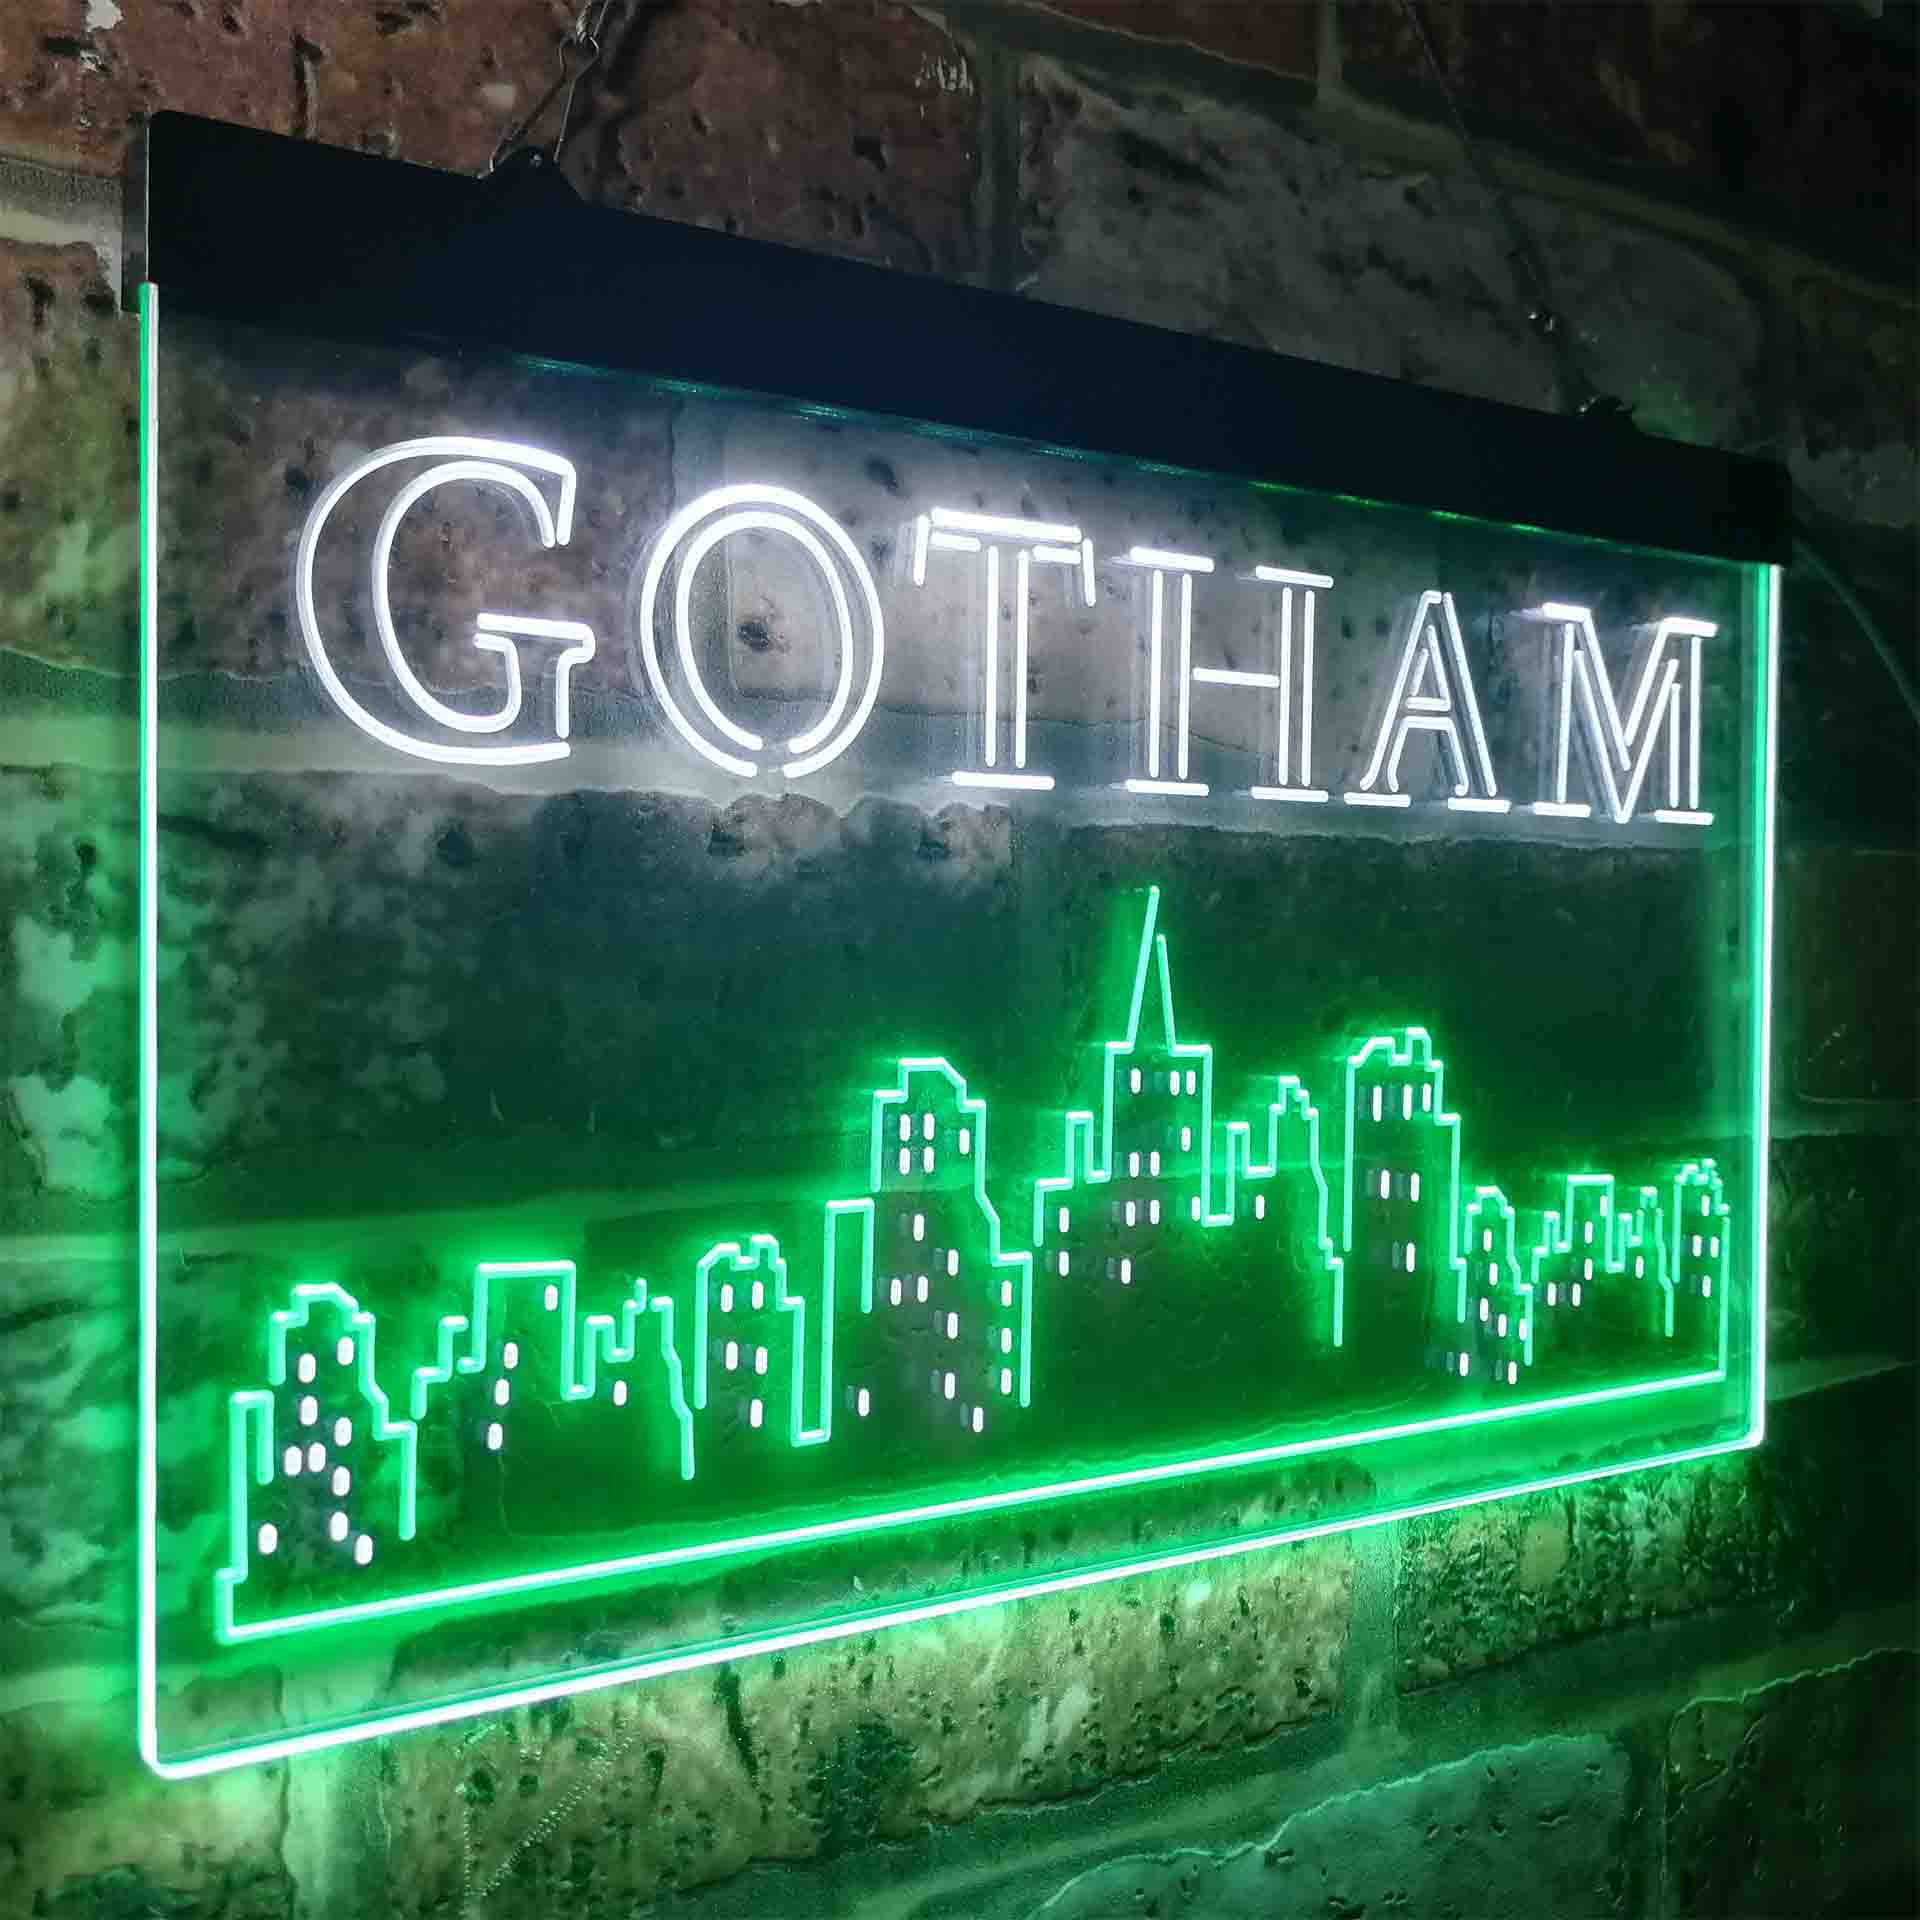 DC Gotham City Game Room Neon Light LED Sign